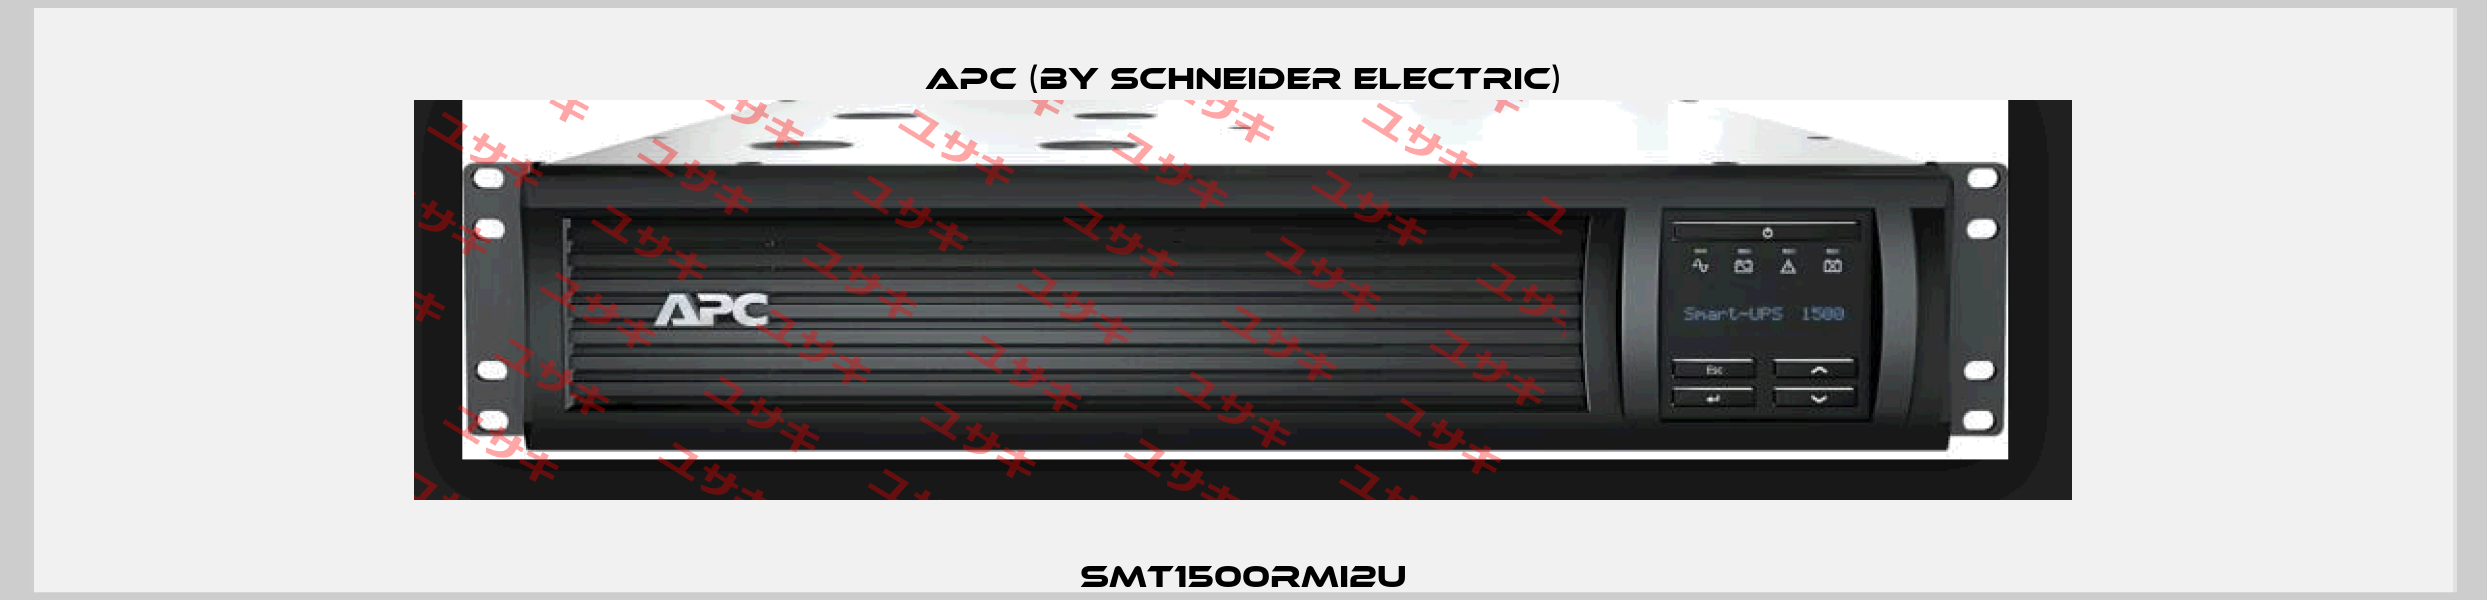 SMT1500RMI2U APC (by Schneider Electric)